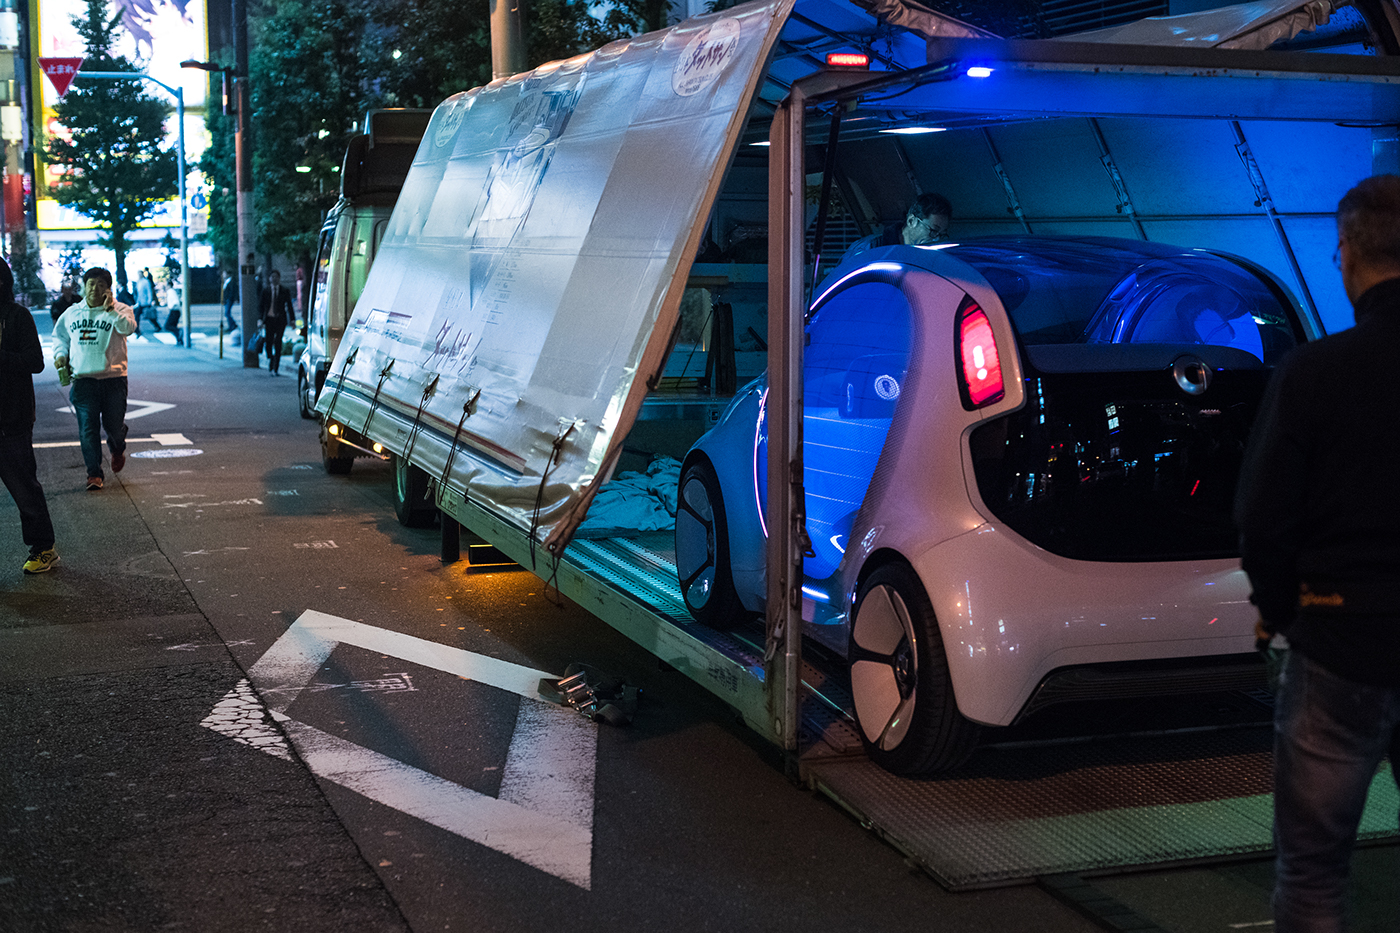 Smart future mobility EQ tokyo Autonomous Driving akihabara automotive  